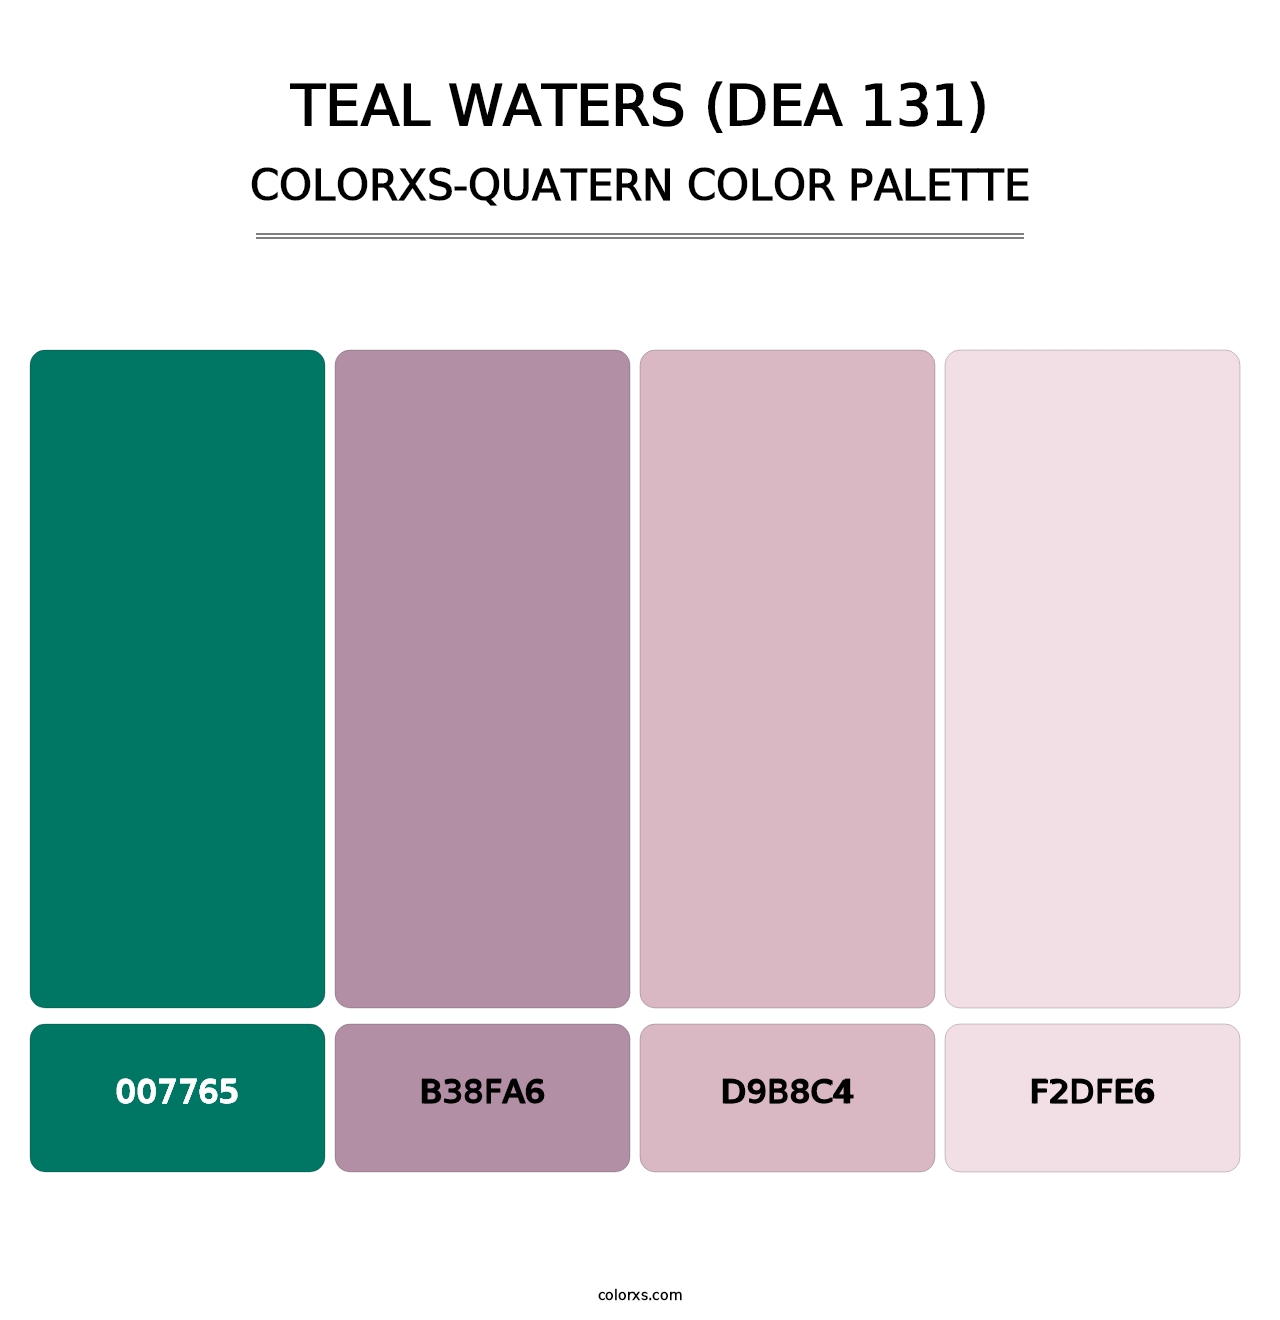 Teal Waters (DEA 131) - Colorxs Quatern Palette